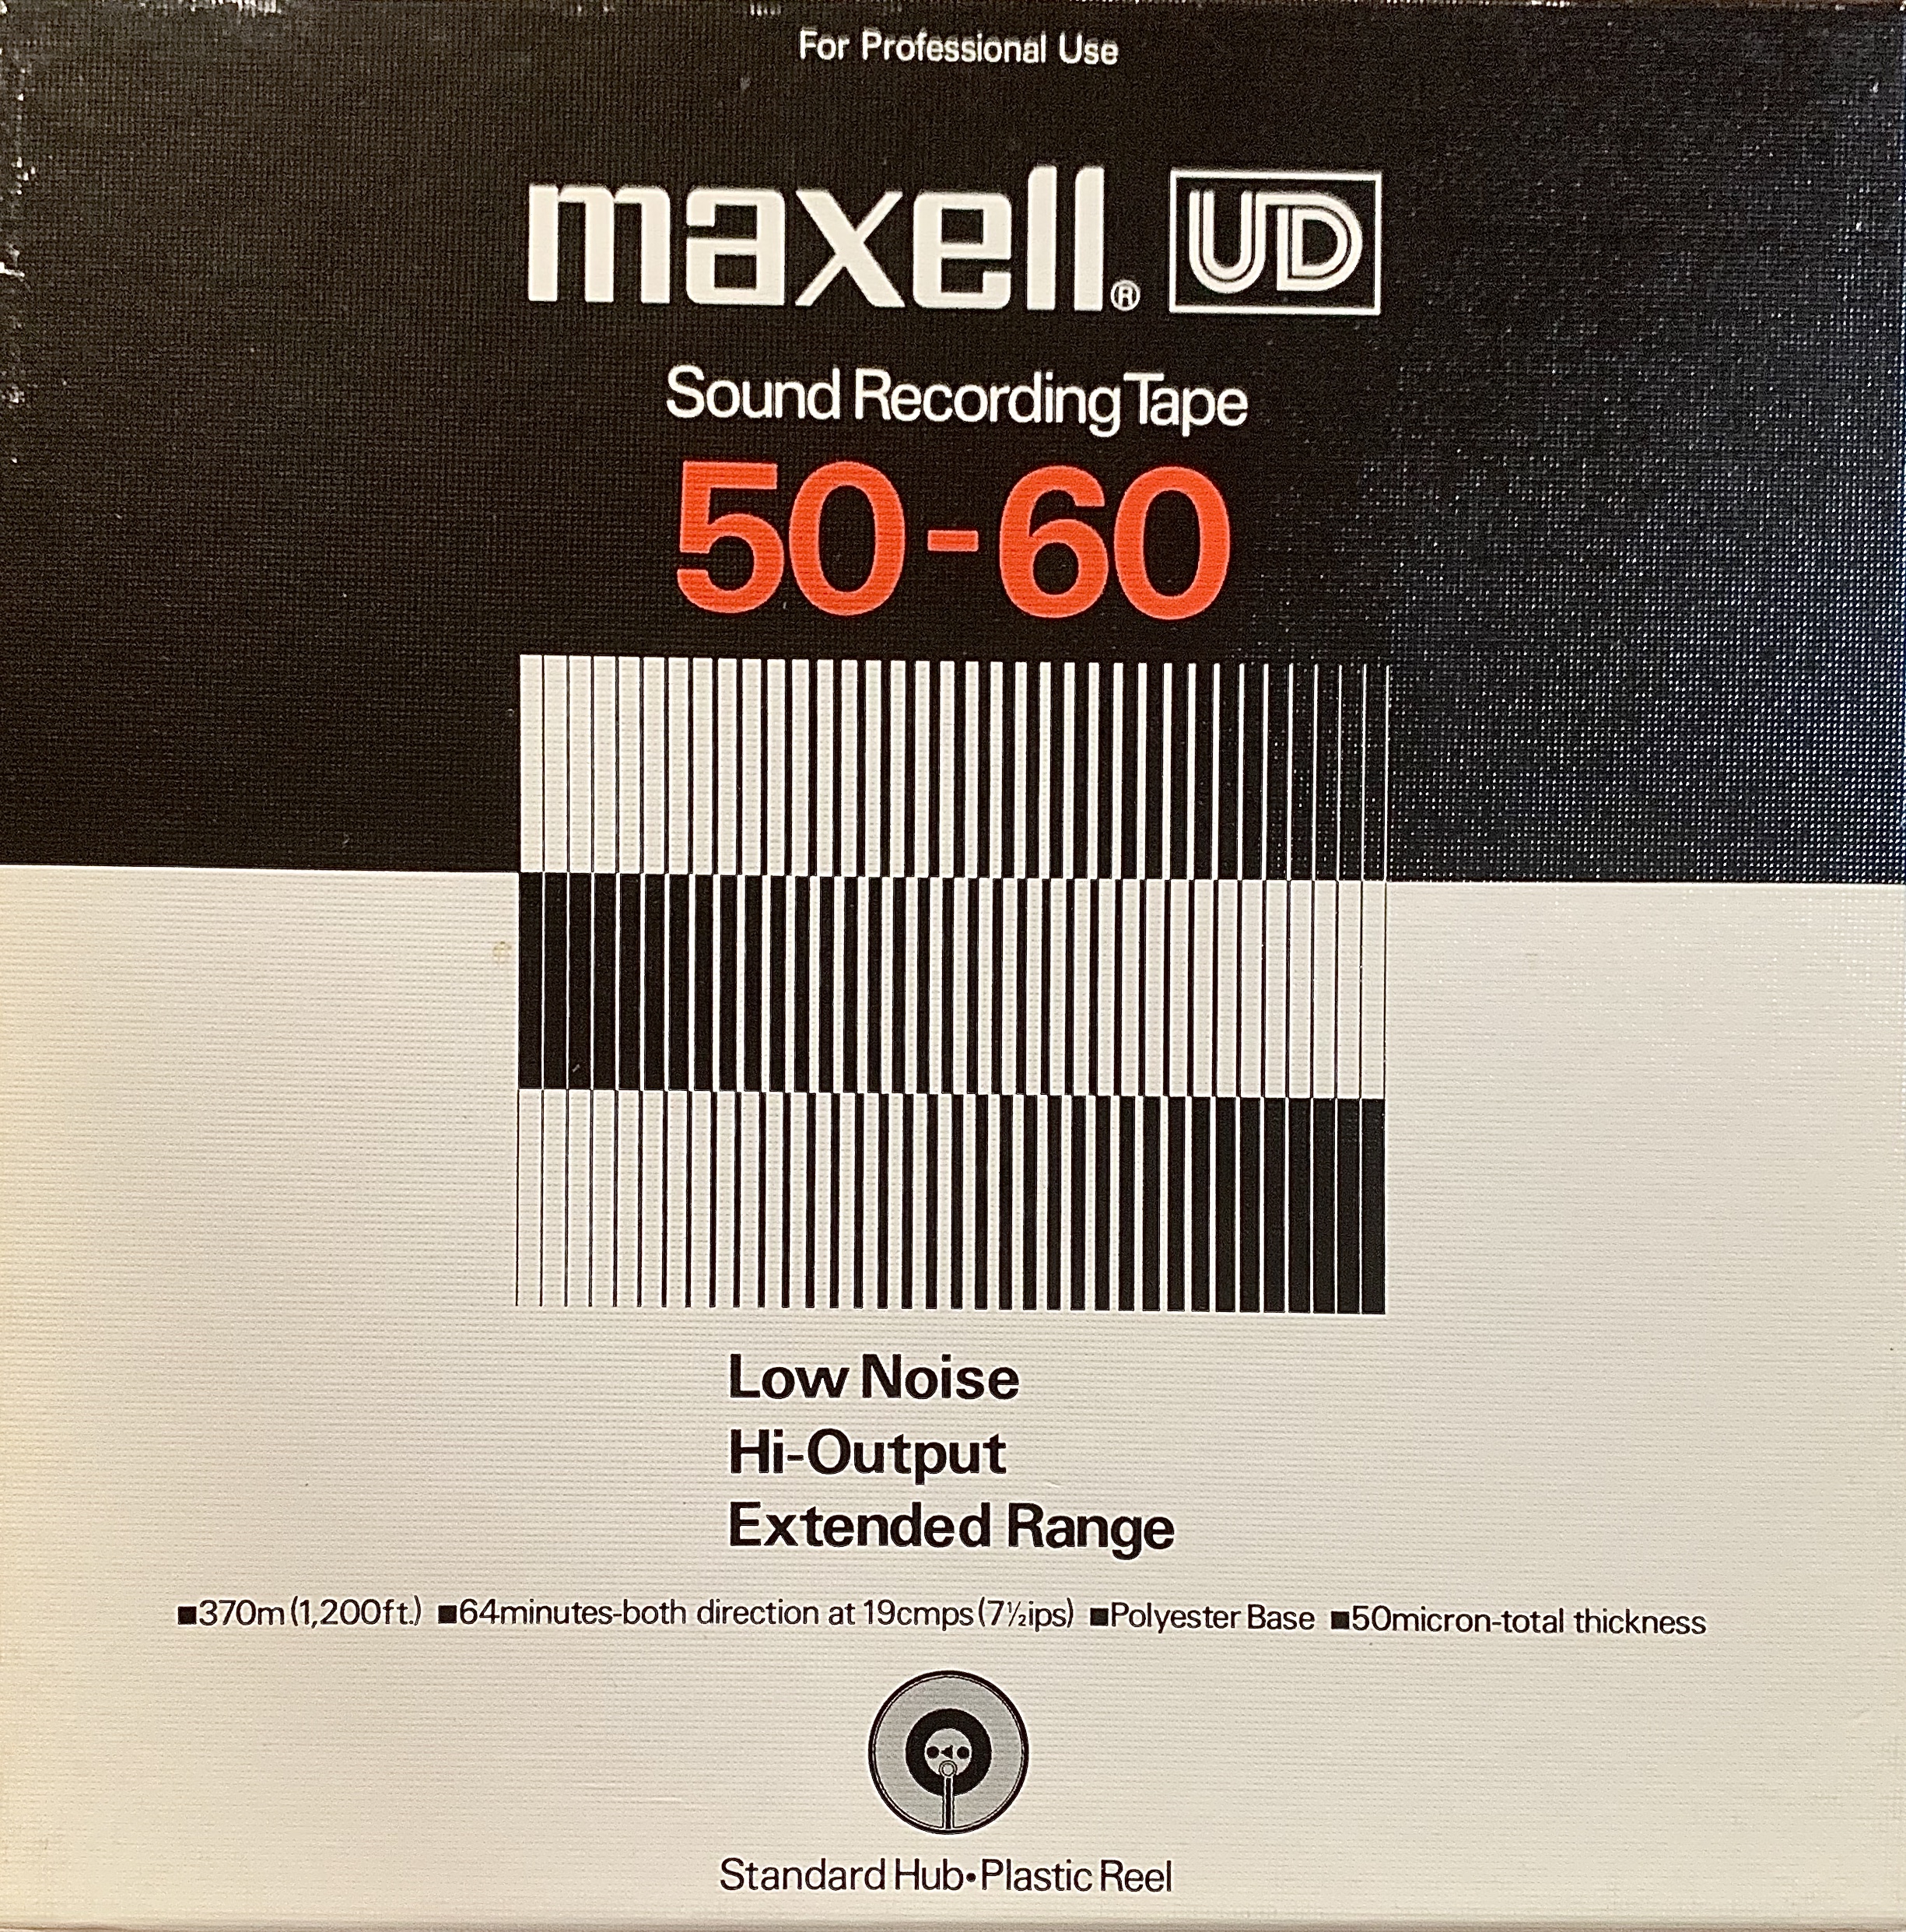 Maxell PC27-7B Digital Audio Master Tape 7 Metal Reel